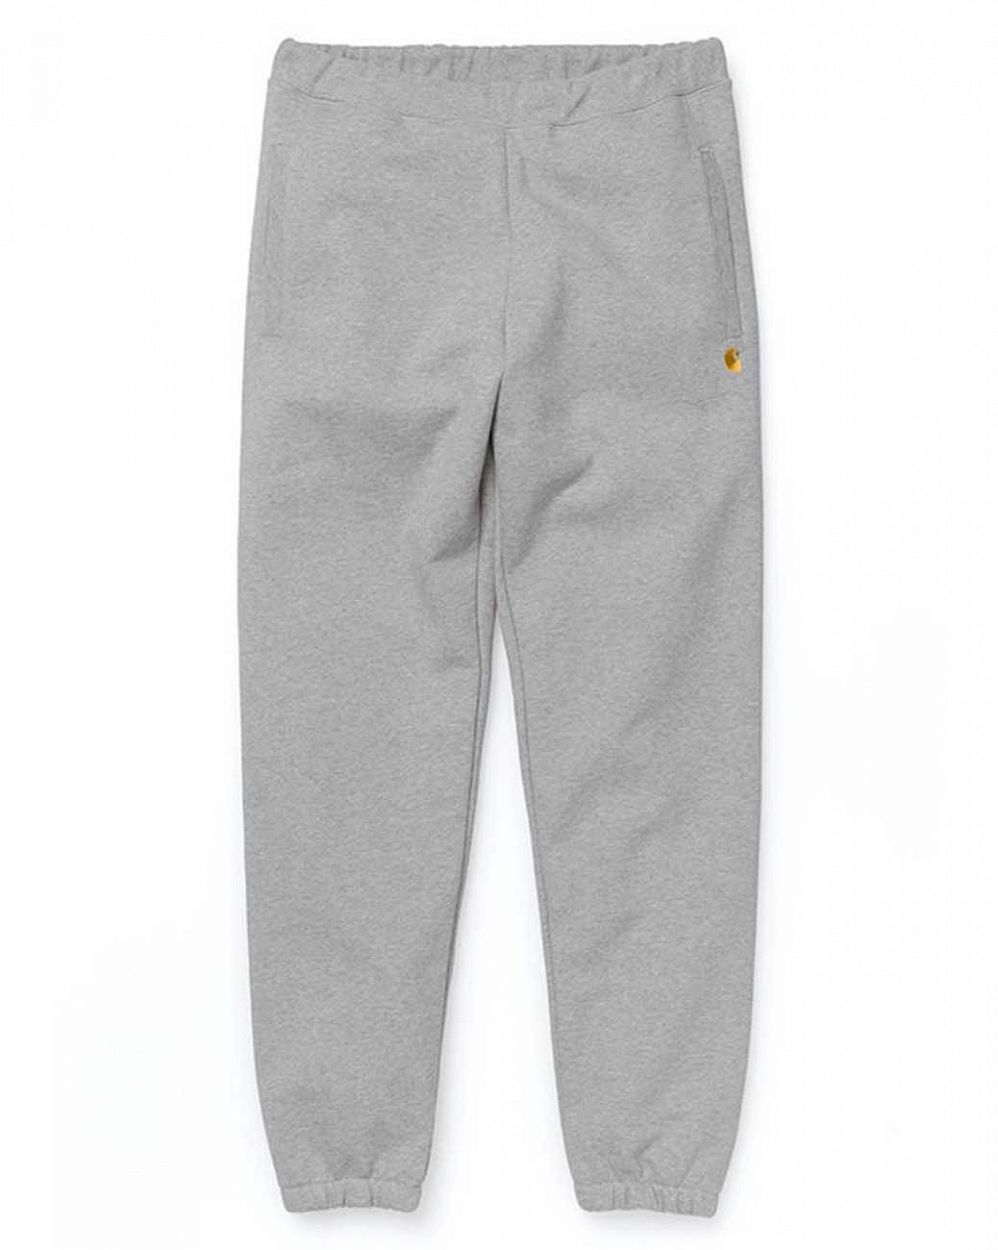 Спортивные штаны на резинке Carhartt WIP Chase Sweat Pant Grey отзывы